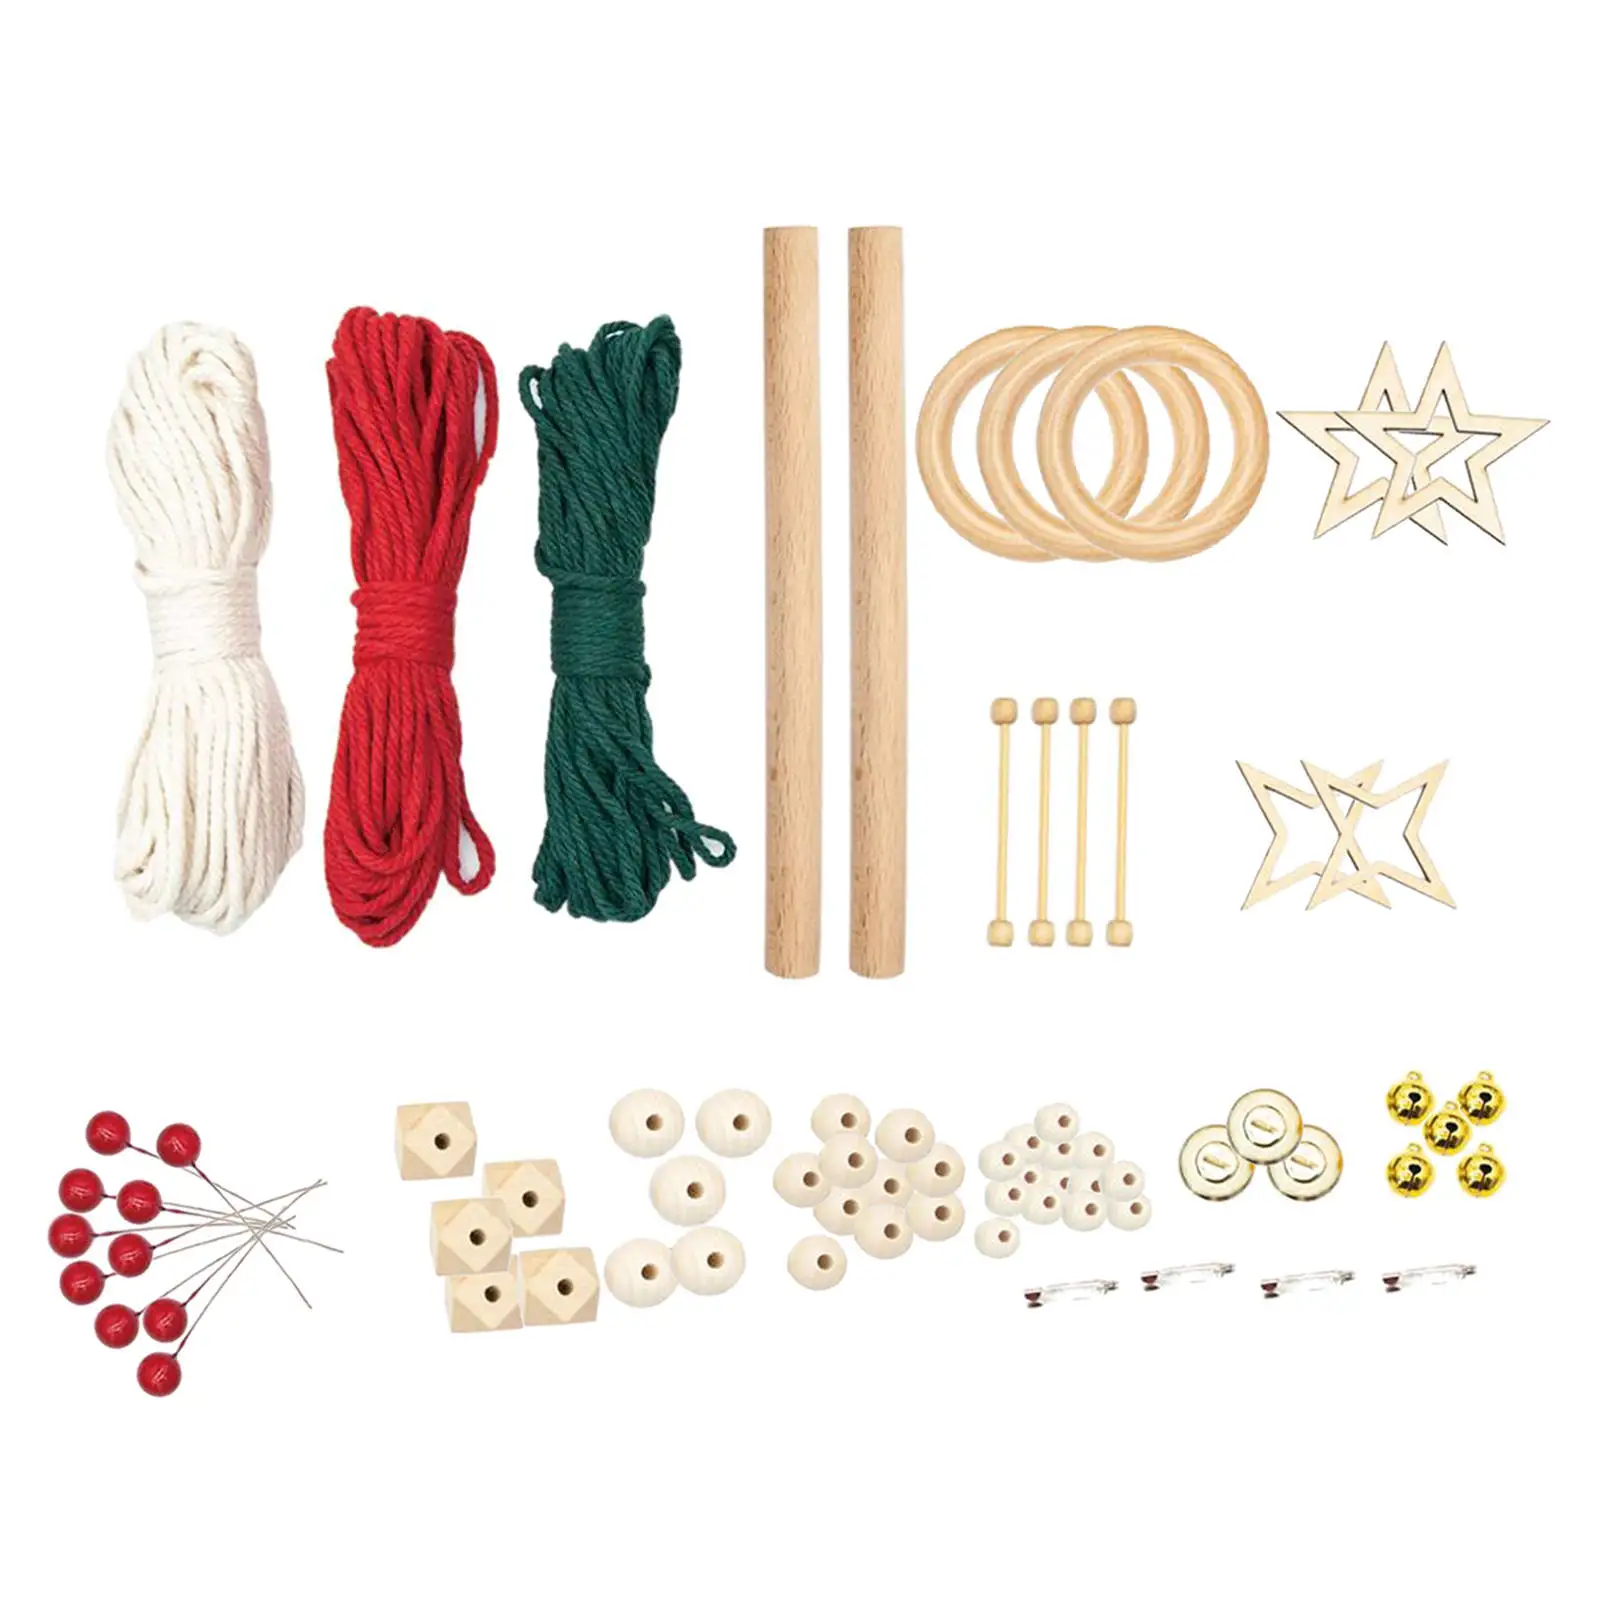 Macrame Kits for Adults Beginners Macrame Christmas Tree Hanging Decor Kit Macrame Starter Kit Decor Macrame Supplies DIY Kits